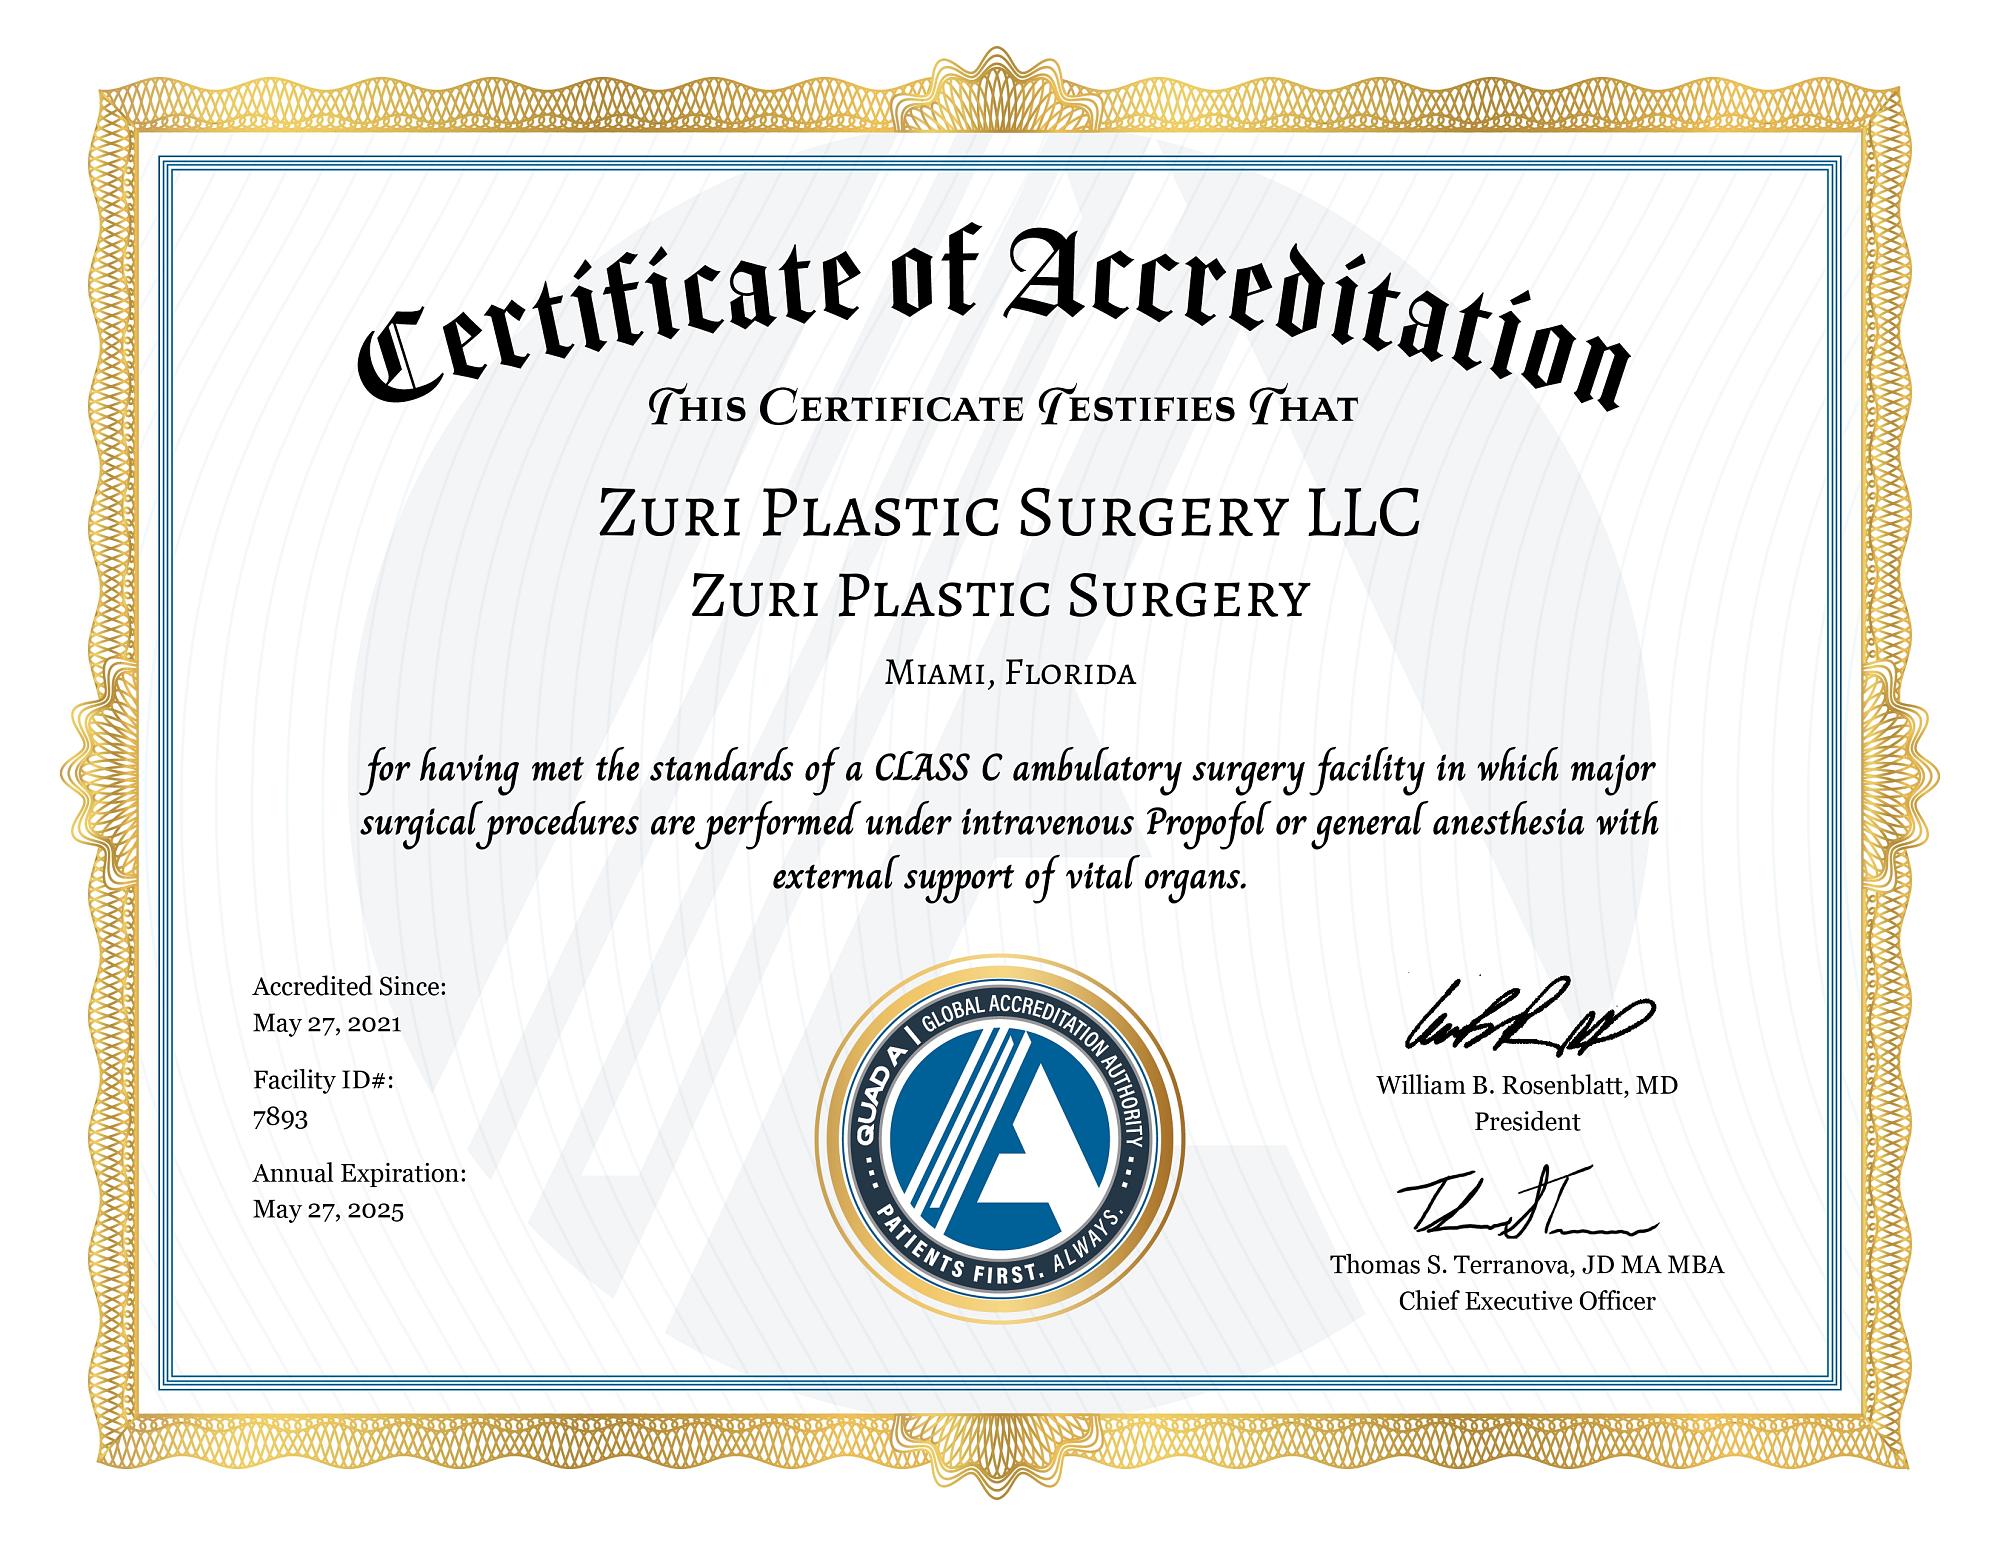 The American Board of Plastic Surgery Dr. Alexander Zuriarrain cert